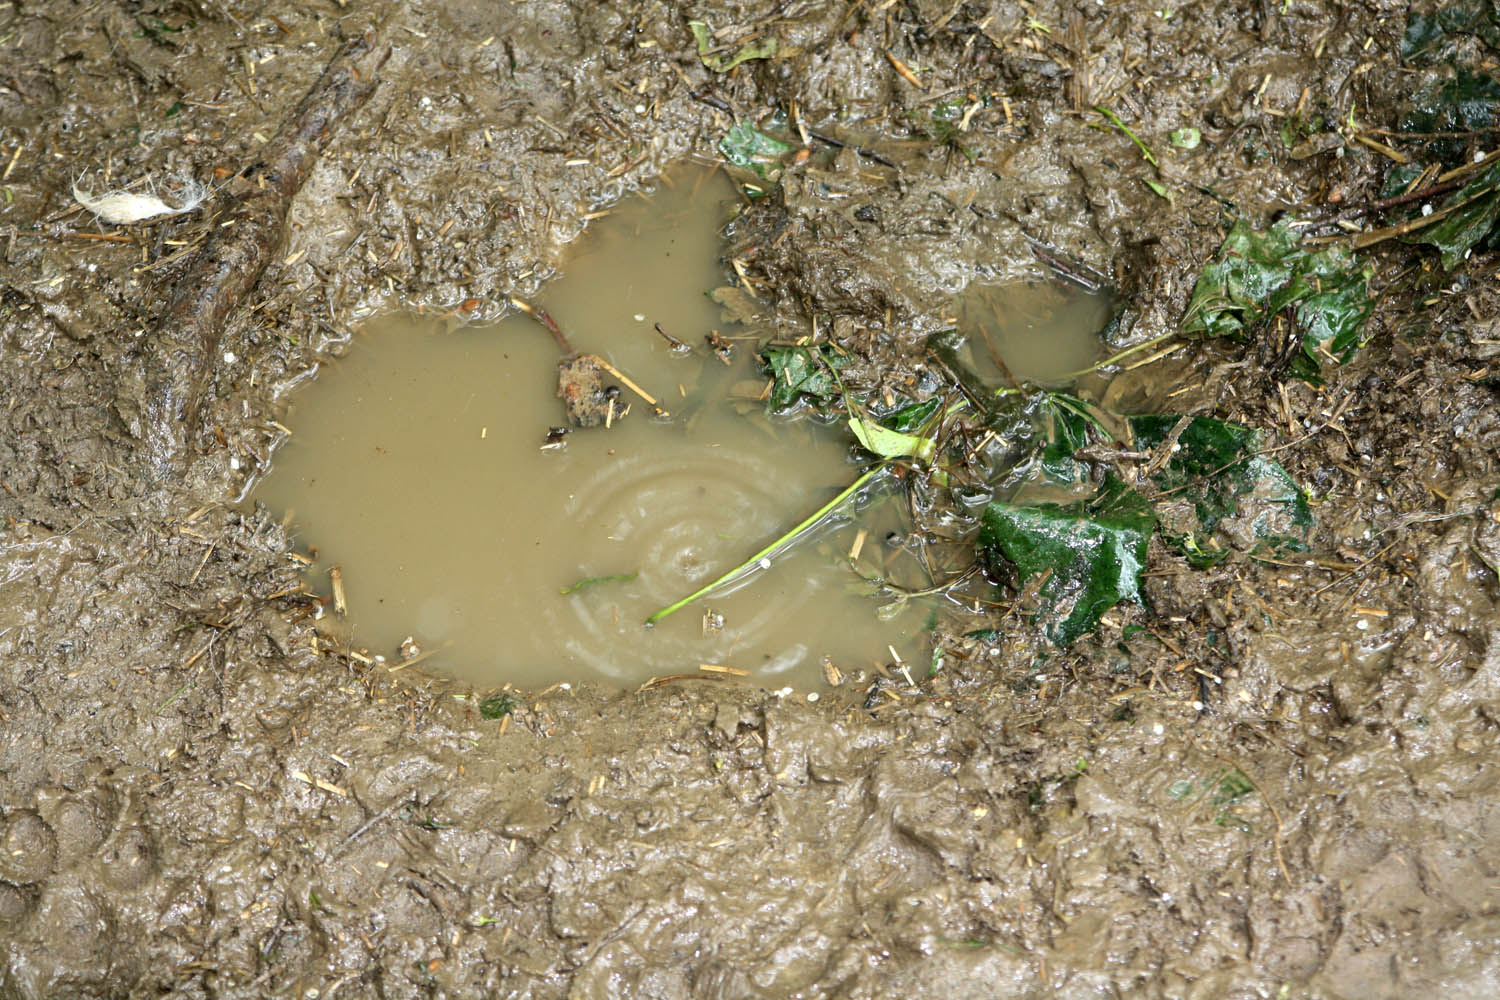 mud puddle